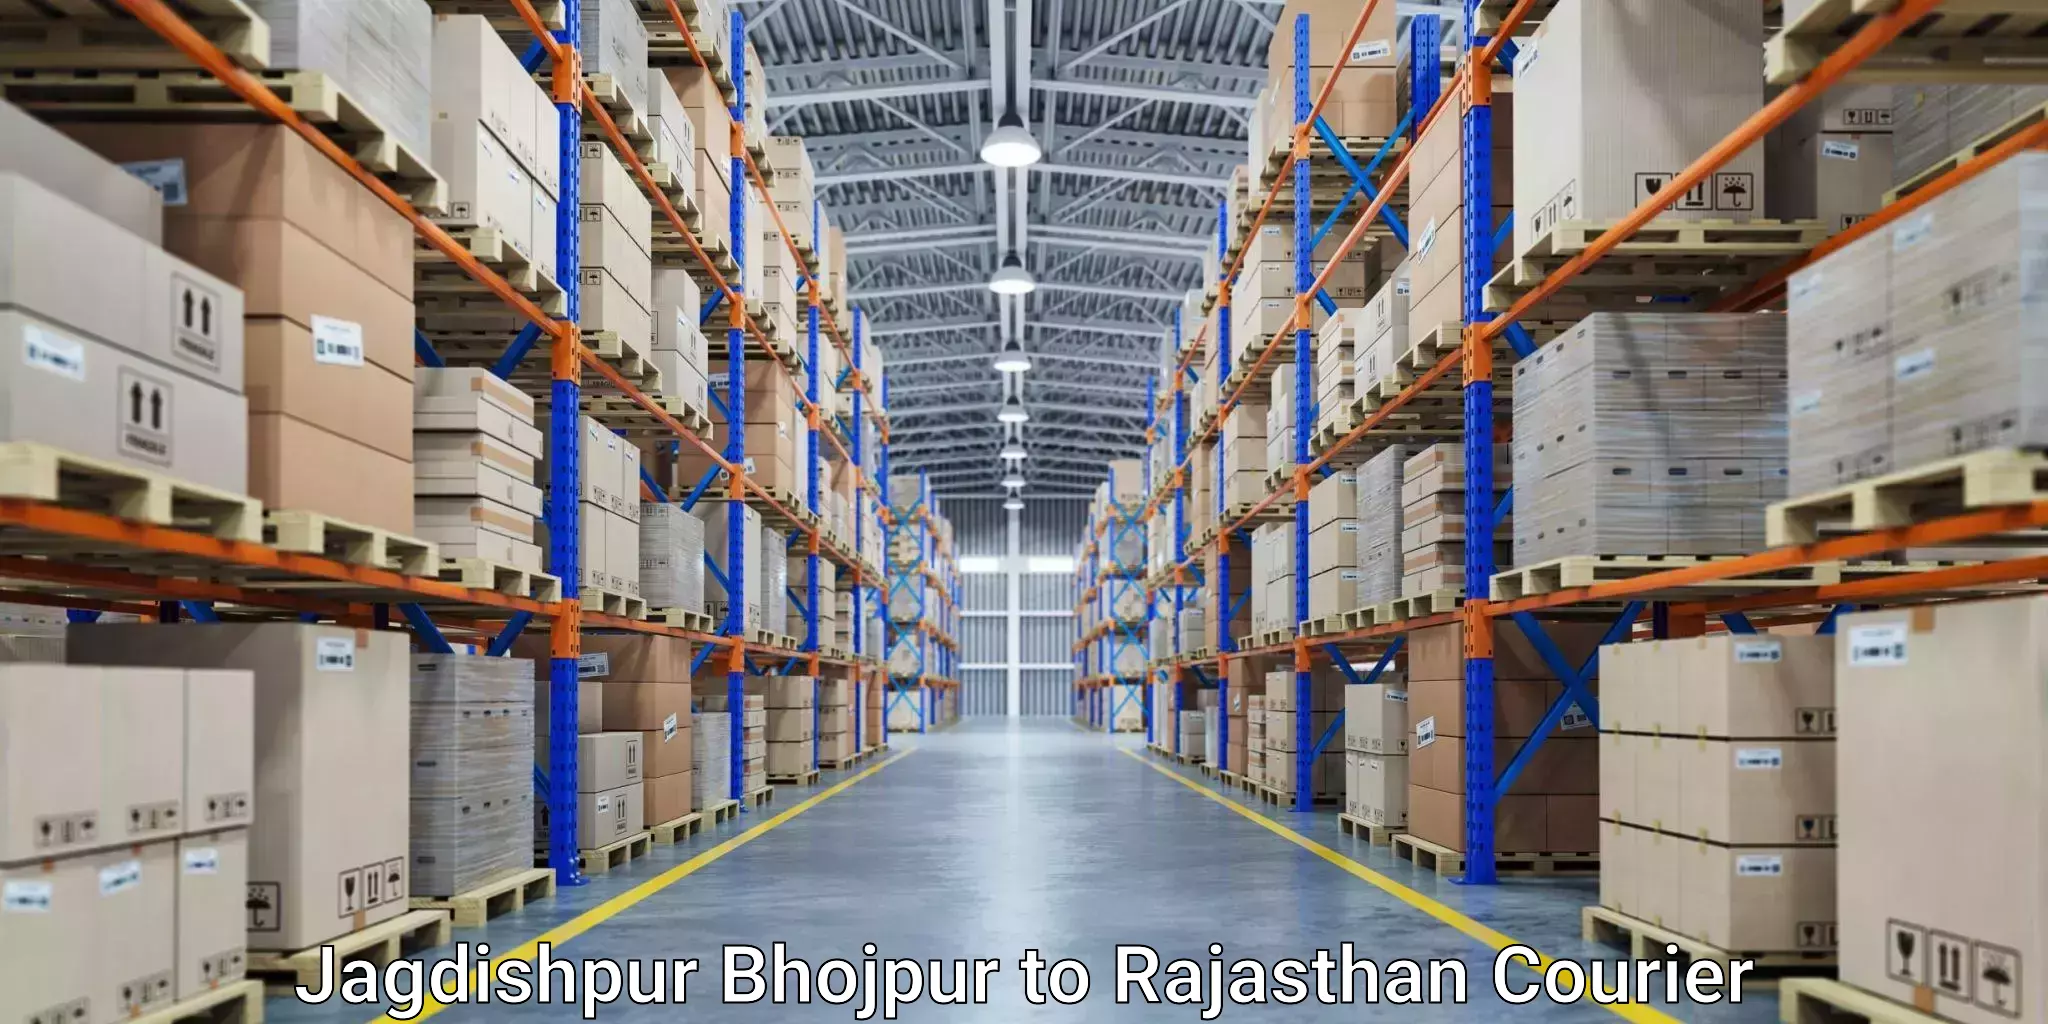 Courier service innovation Jagdishpur Bhojpur to Suratgarh